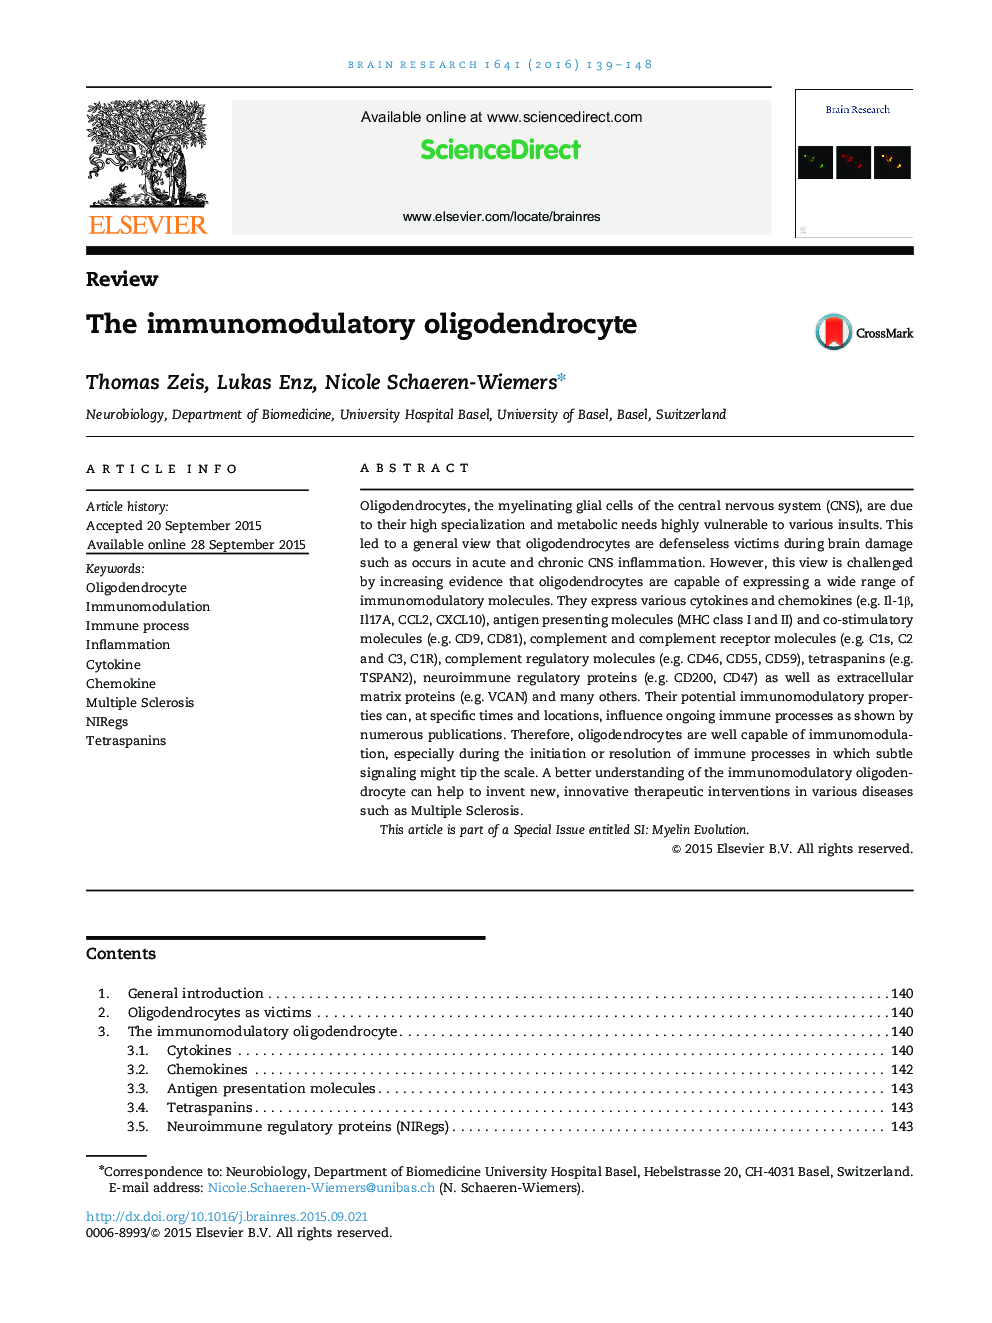 ReviewThe immunomodulatory oligodendrocyte